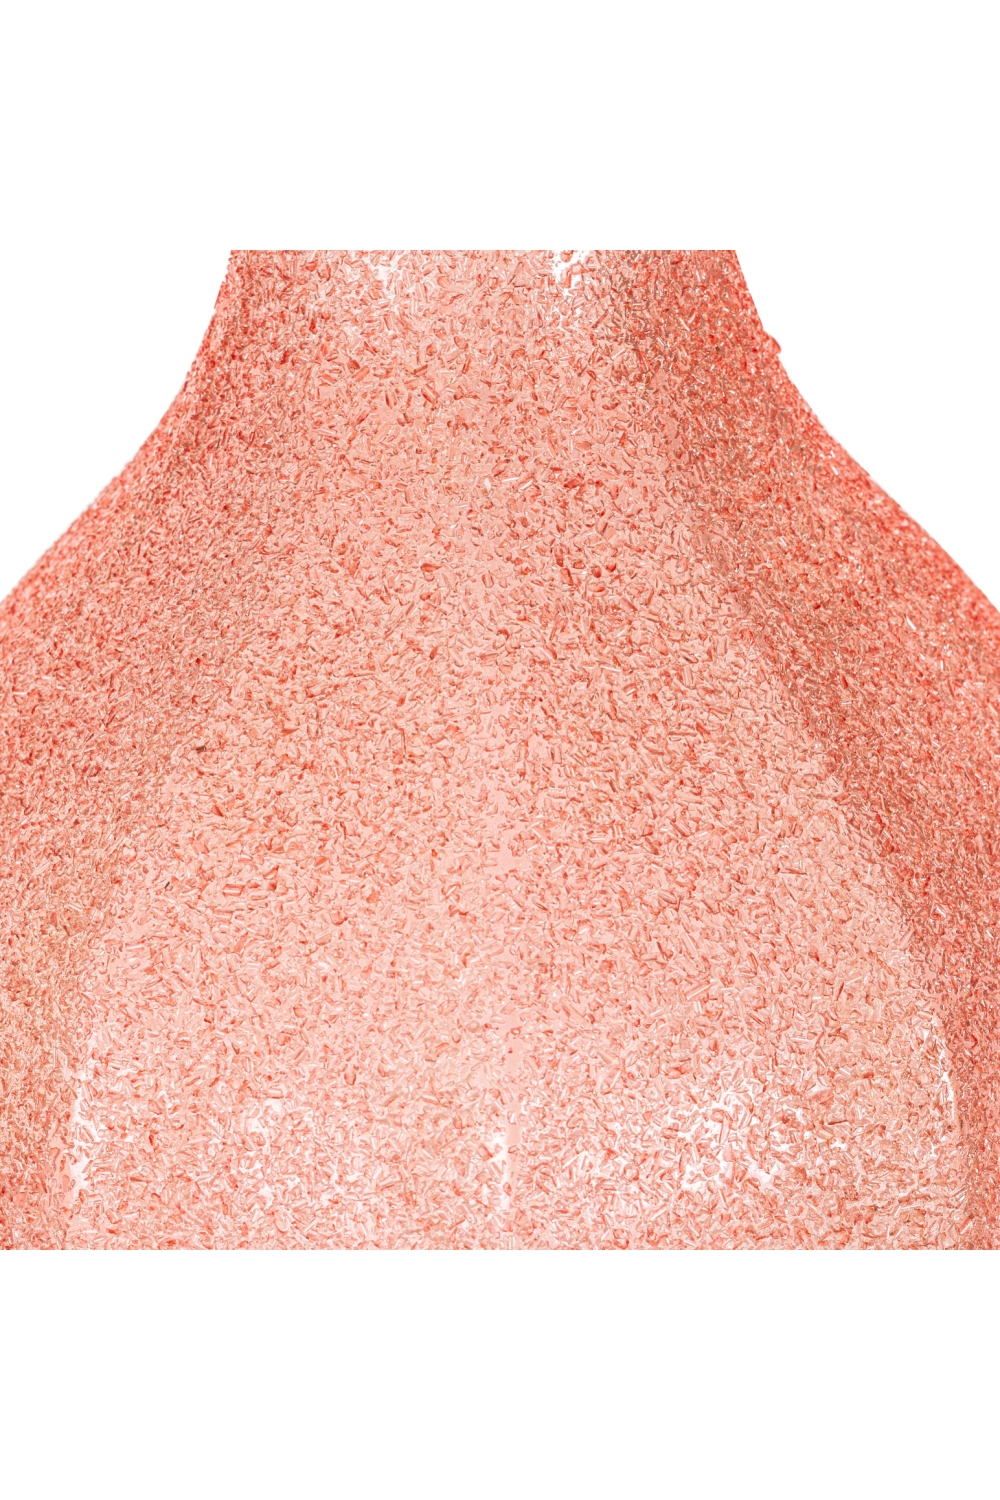 Pink Glass Bottle Vase S | OROA Ceylin | OROA.com